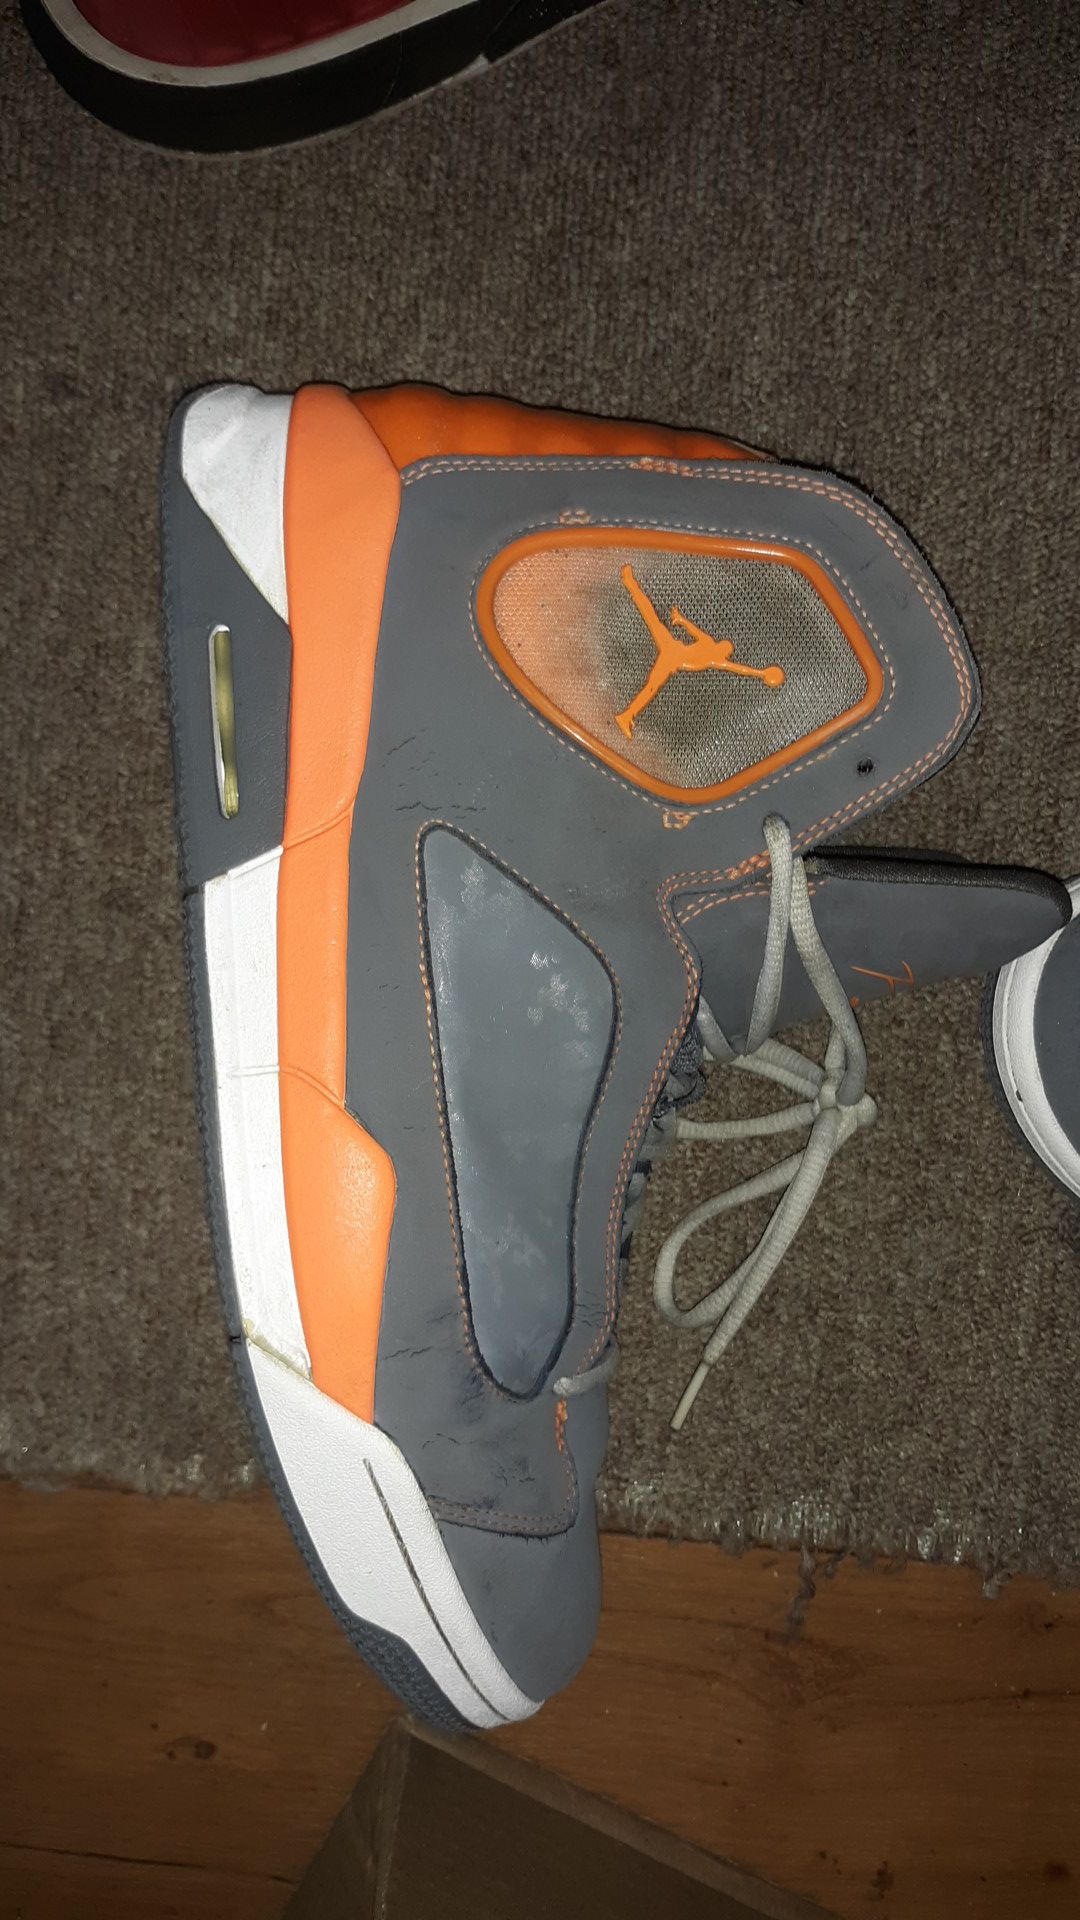 New used Jordans